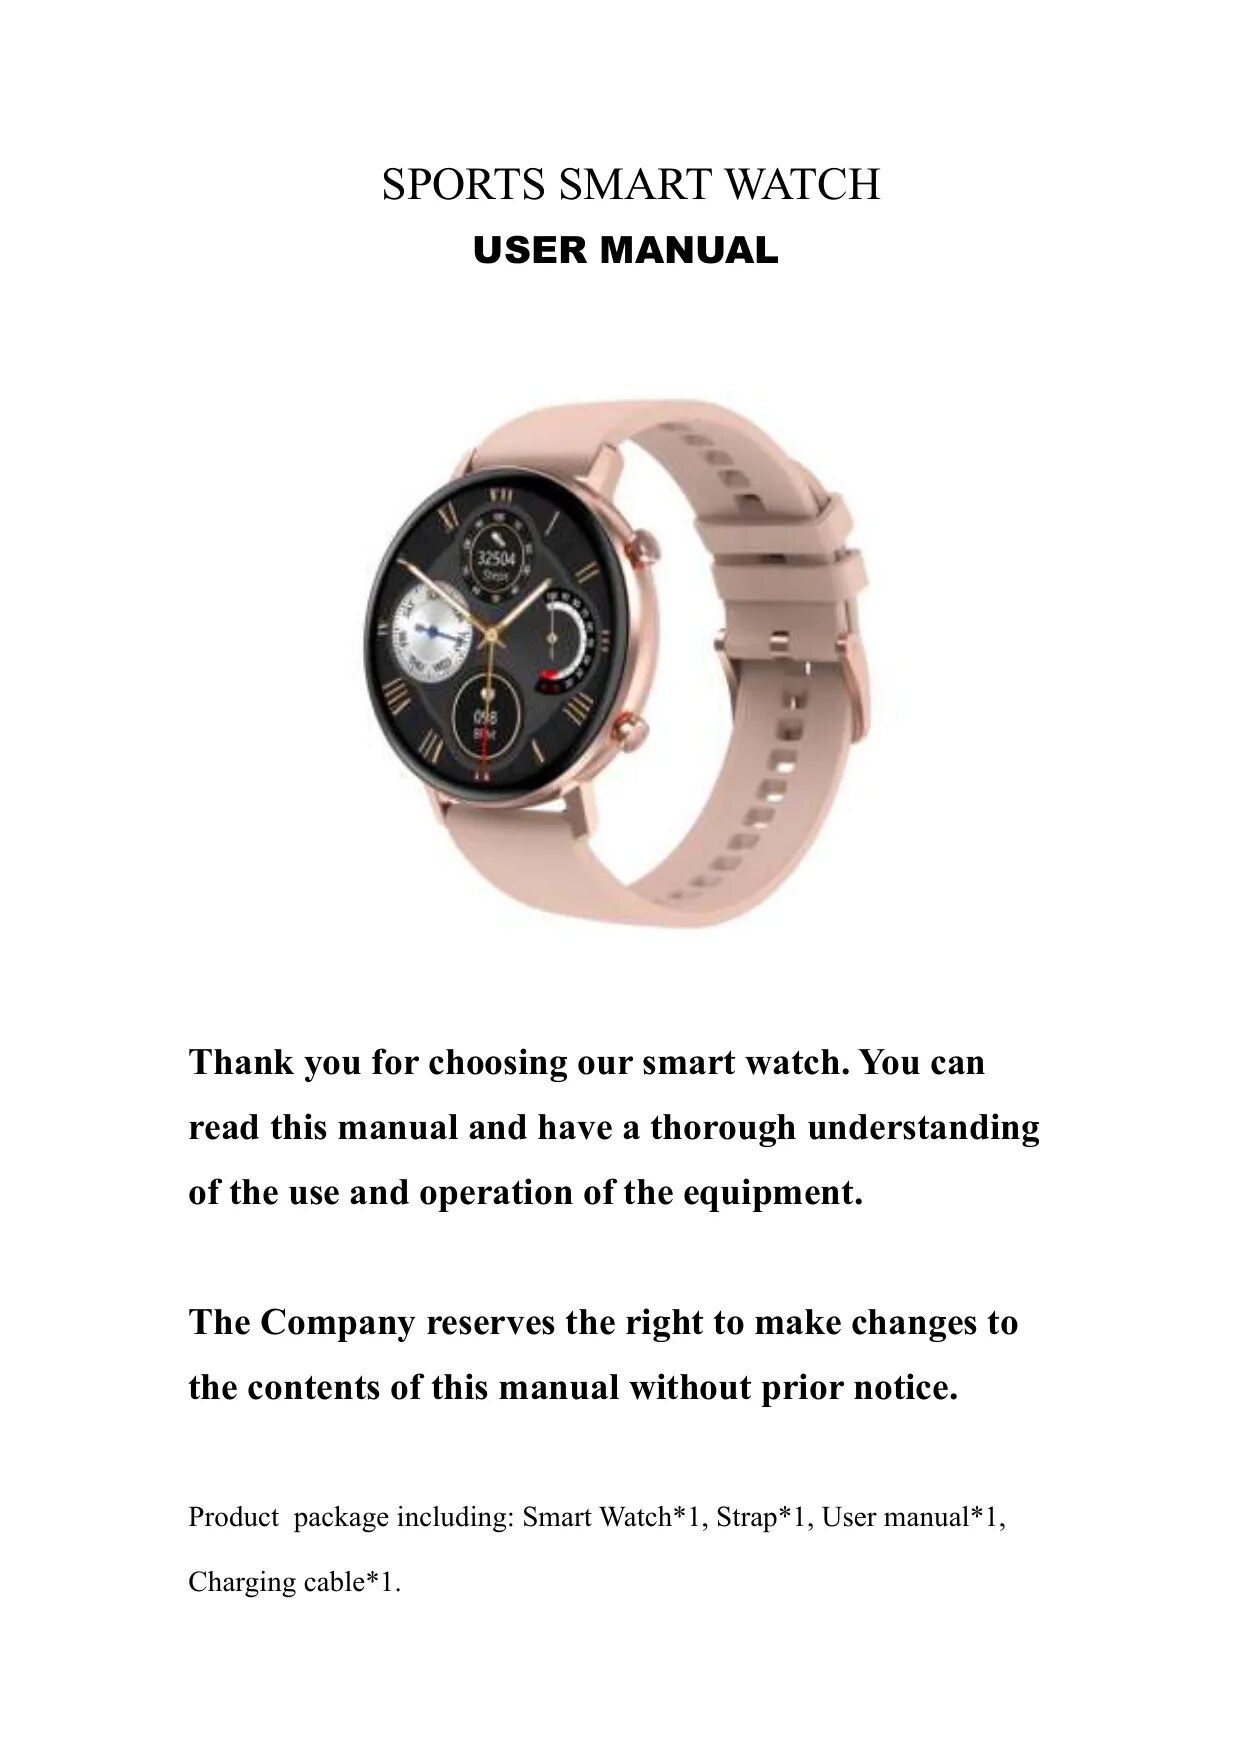 Смарт часы SMARTWATCH manual. Умные часы fk99 Smart watch user's manual. Смарт часы 129 user manual. Смарт часы Smart watch user manual. Инструкция по смарт часам watch